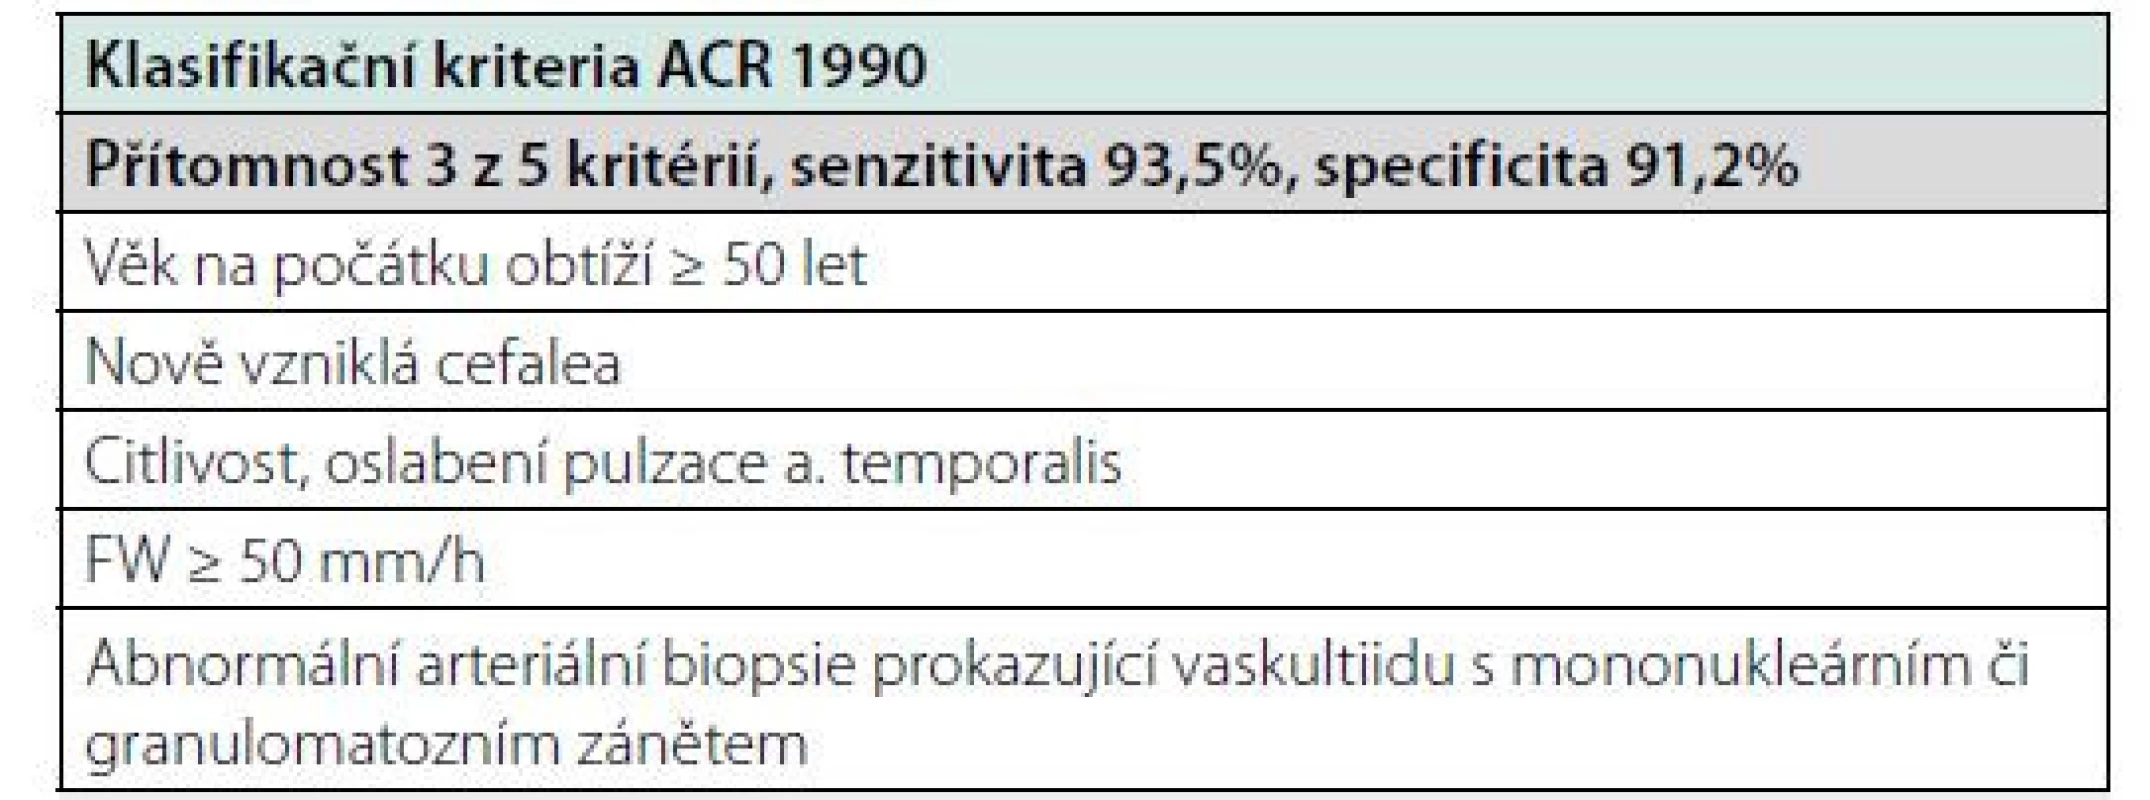 Klasifikační kriteria GCA dle ACR 1990